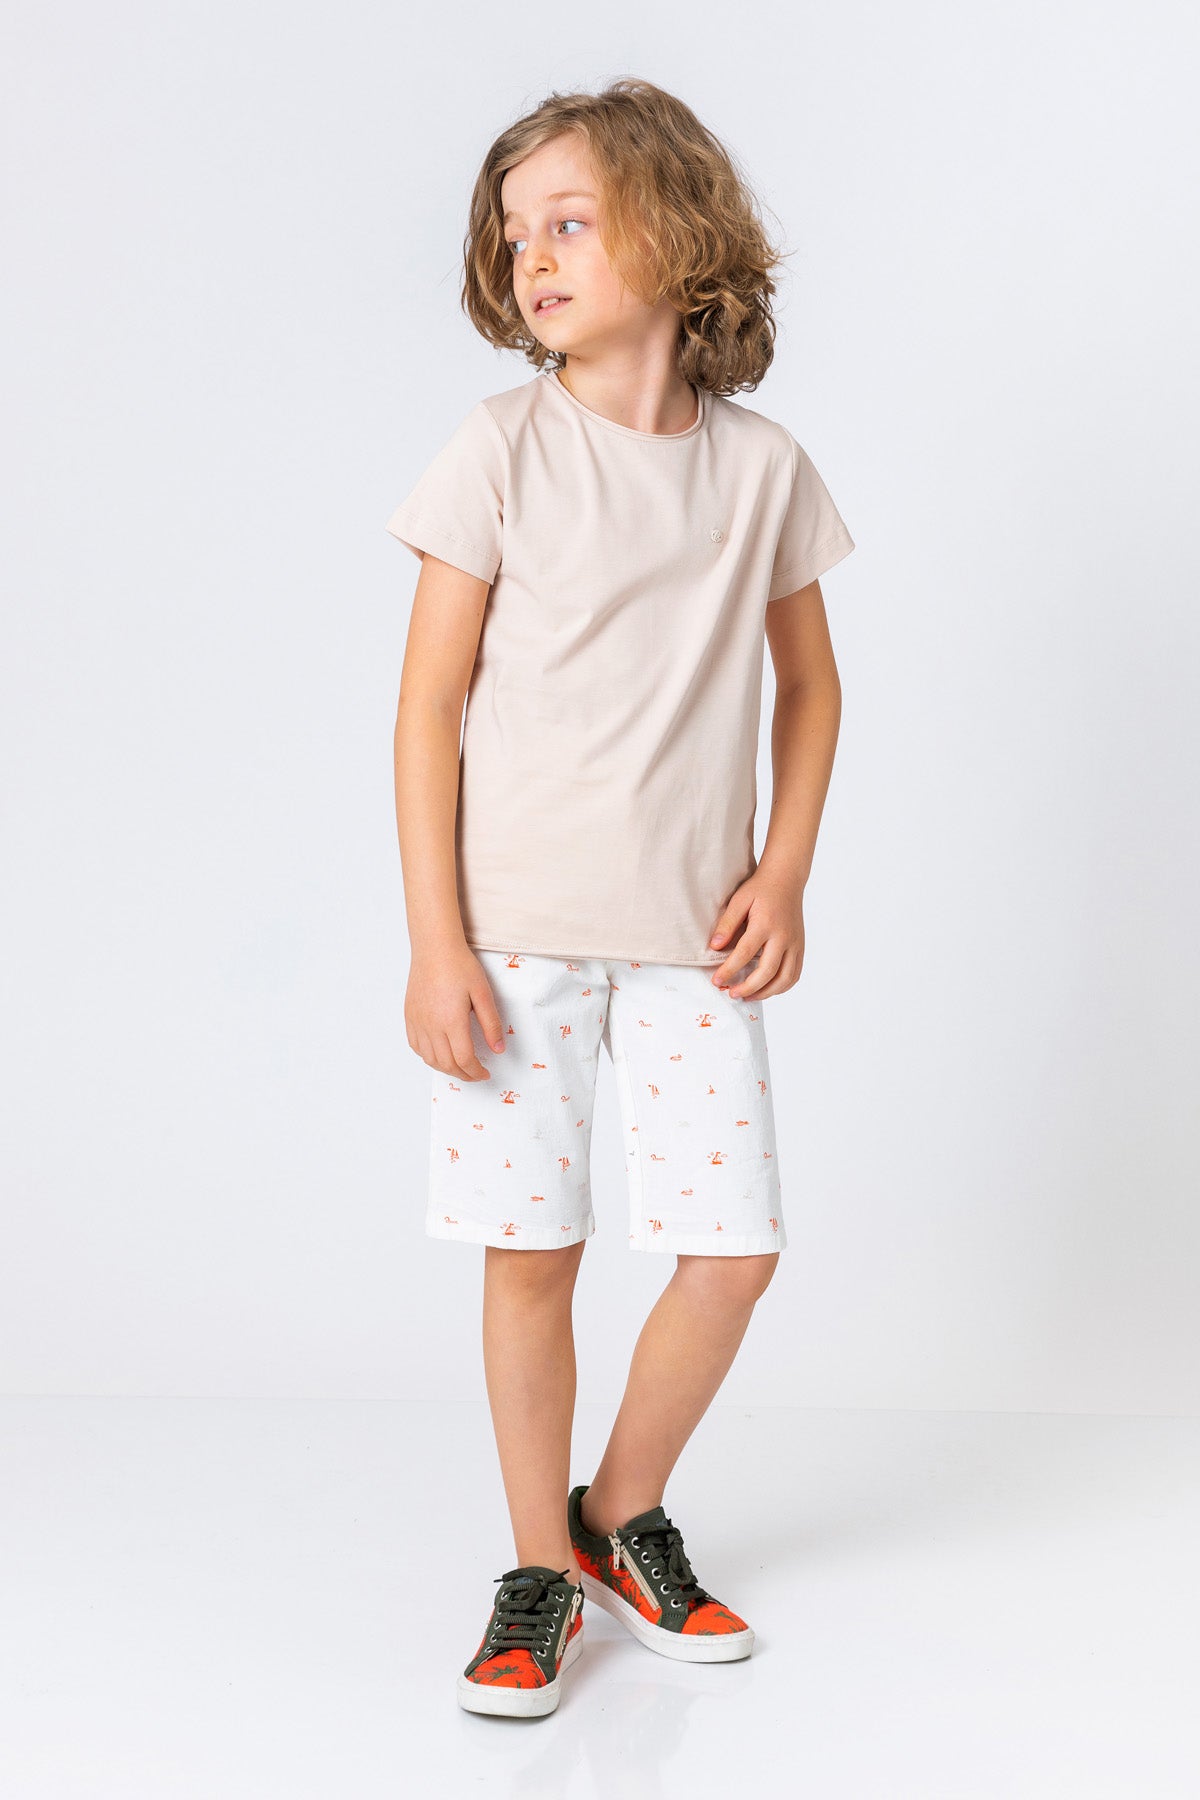 Round Plain Sleeve Kids Short Solid Neck Basic InCity T-Shirt Boys